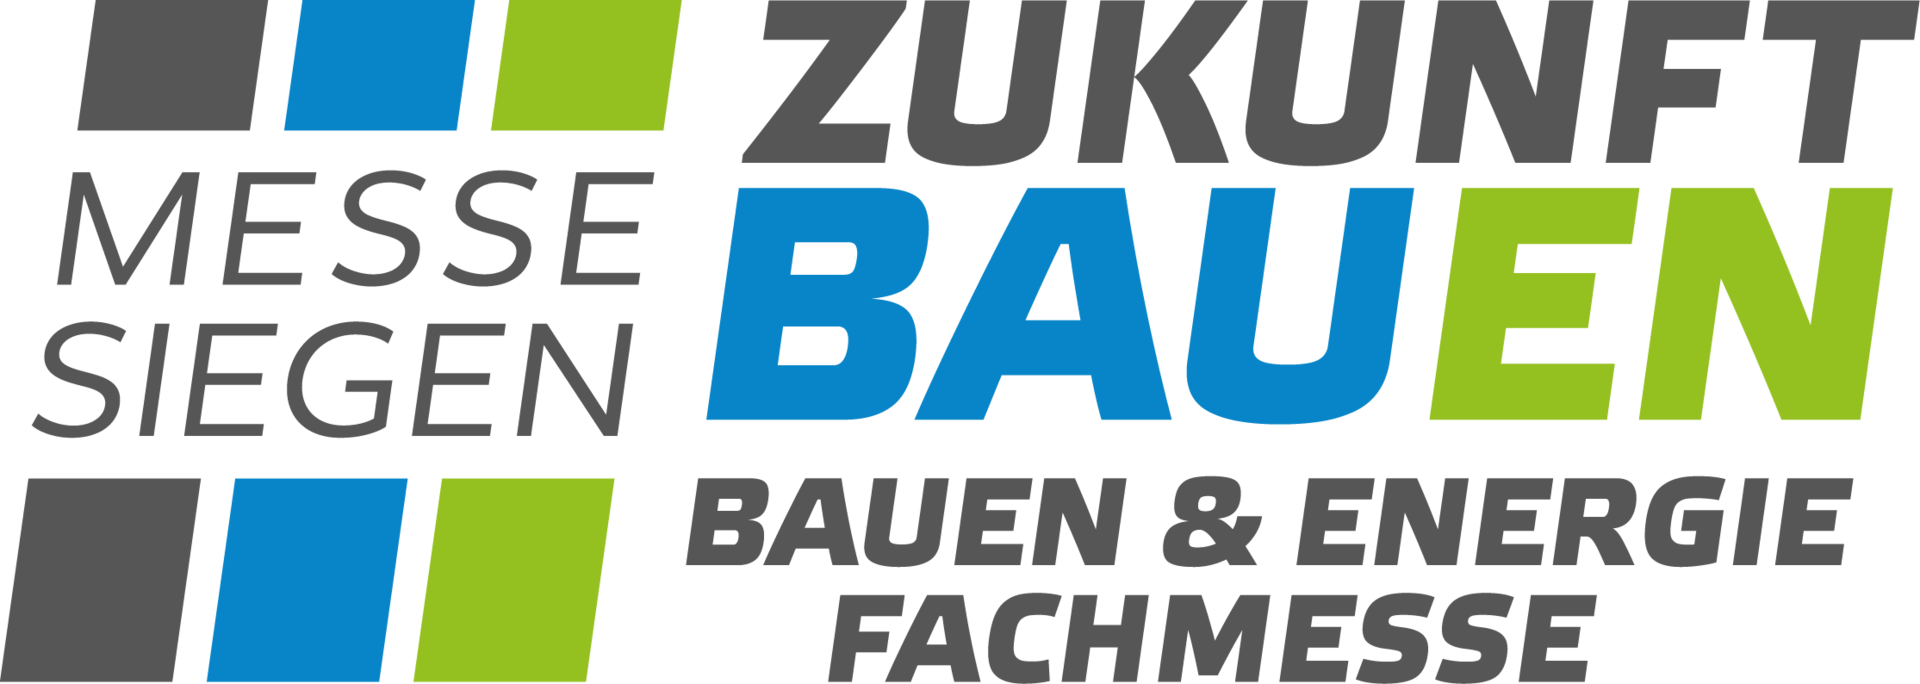 Zukunft - Bauen - Energie Messe in Siegen